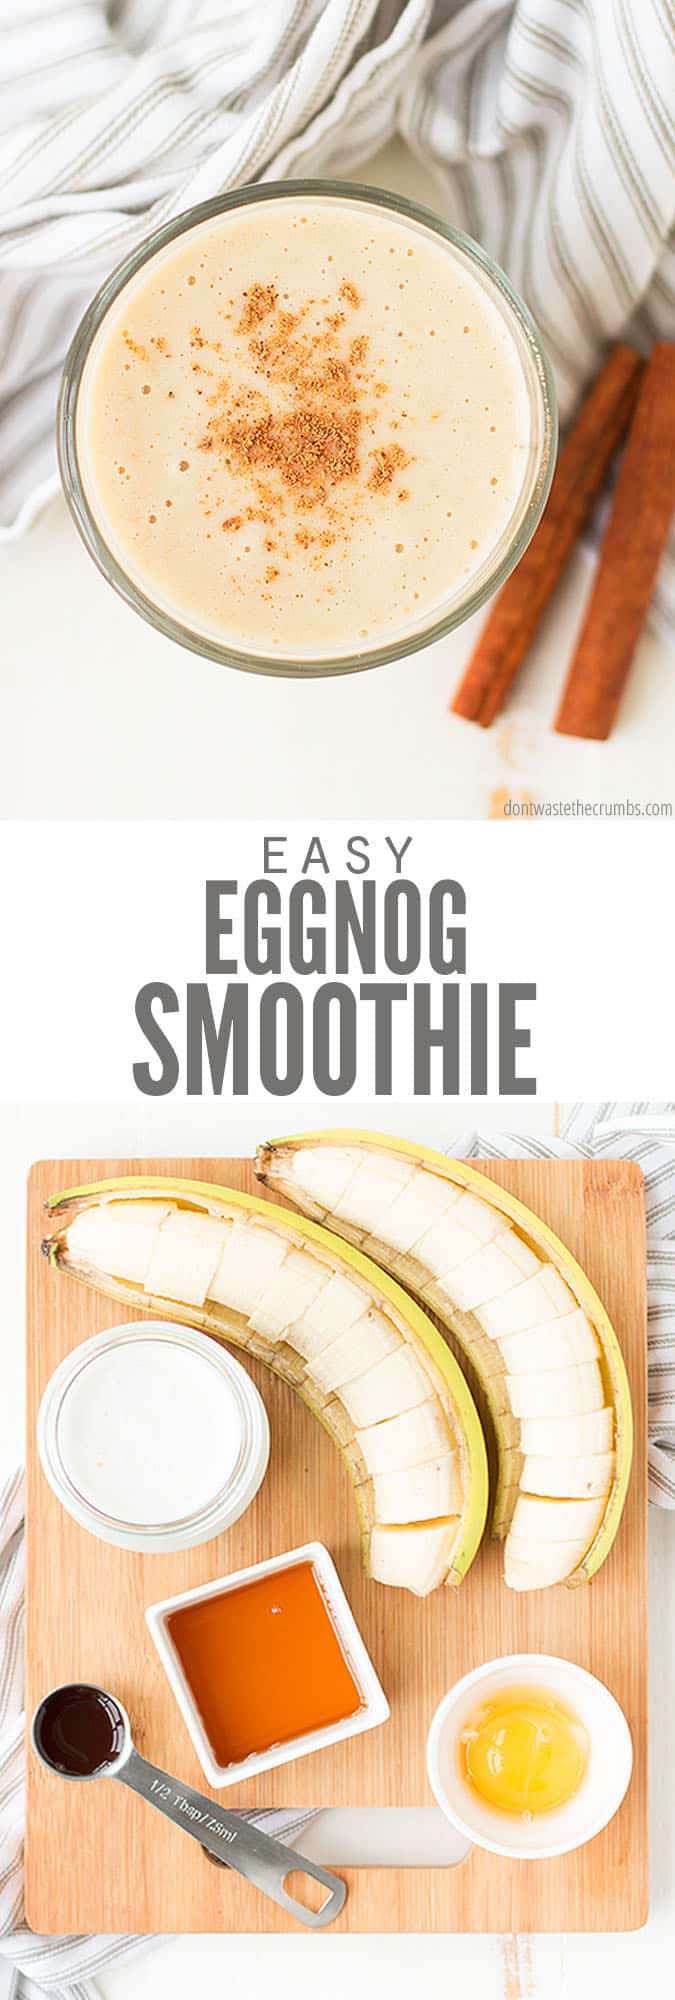 Delicious Eggnog Smoothie with No Fake Ingredients